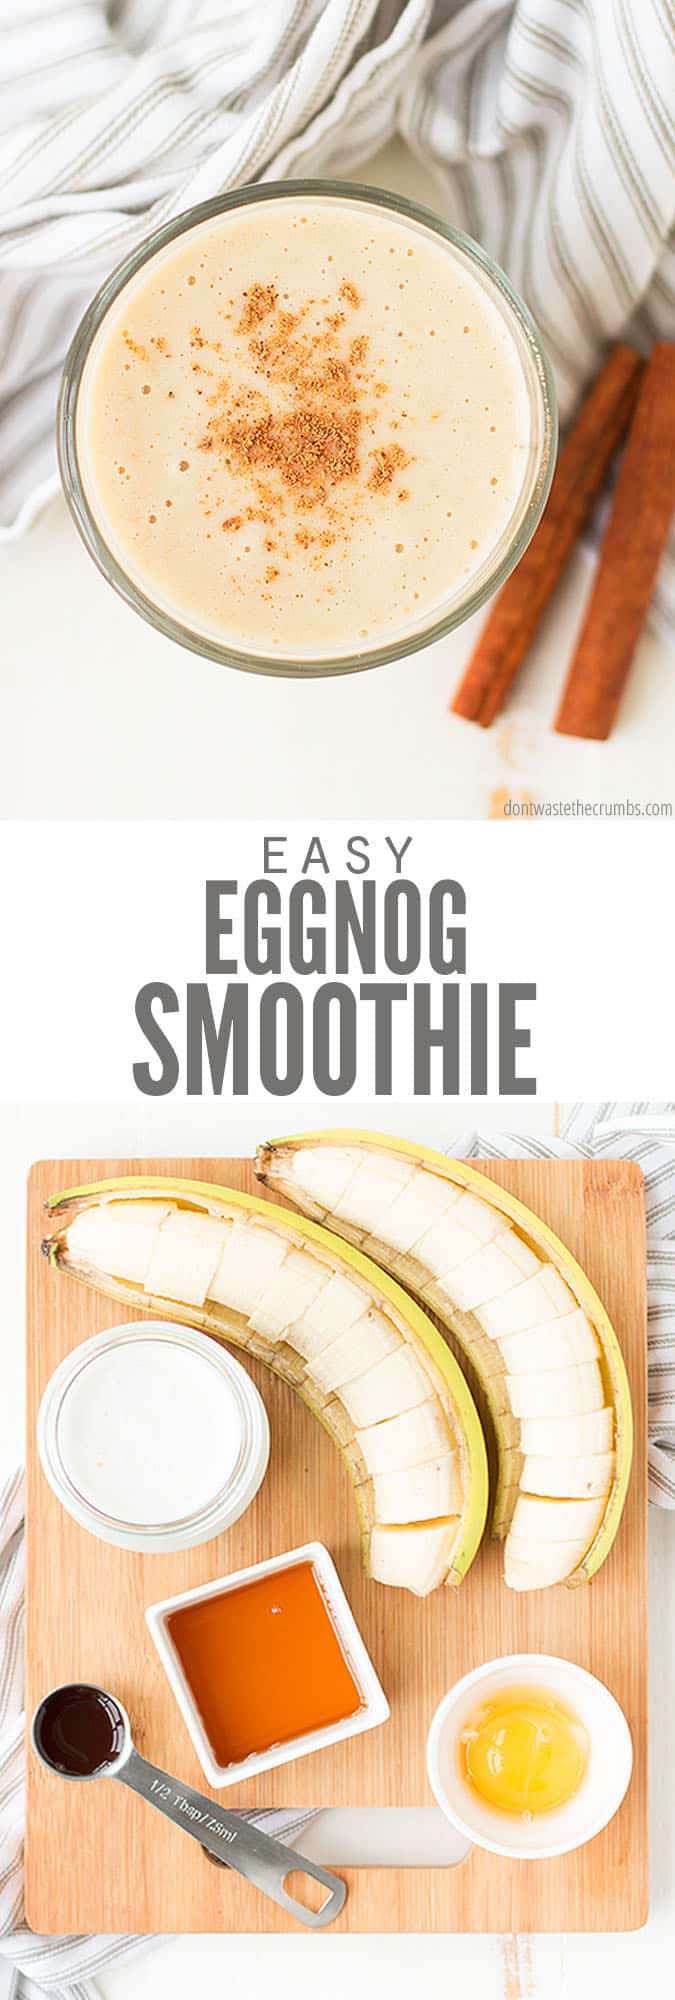 Delicious Eggnog Smoothie with No Fake Ingredients